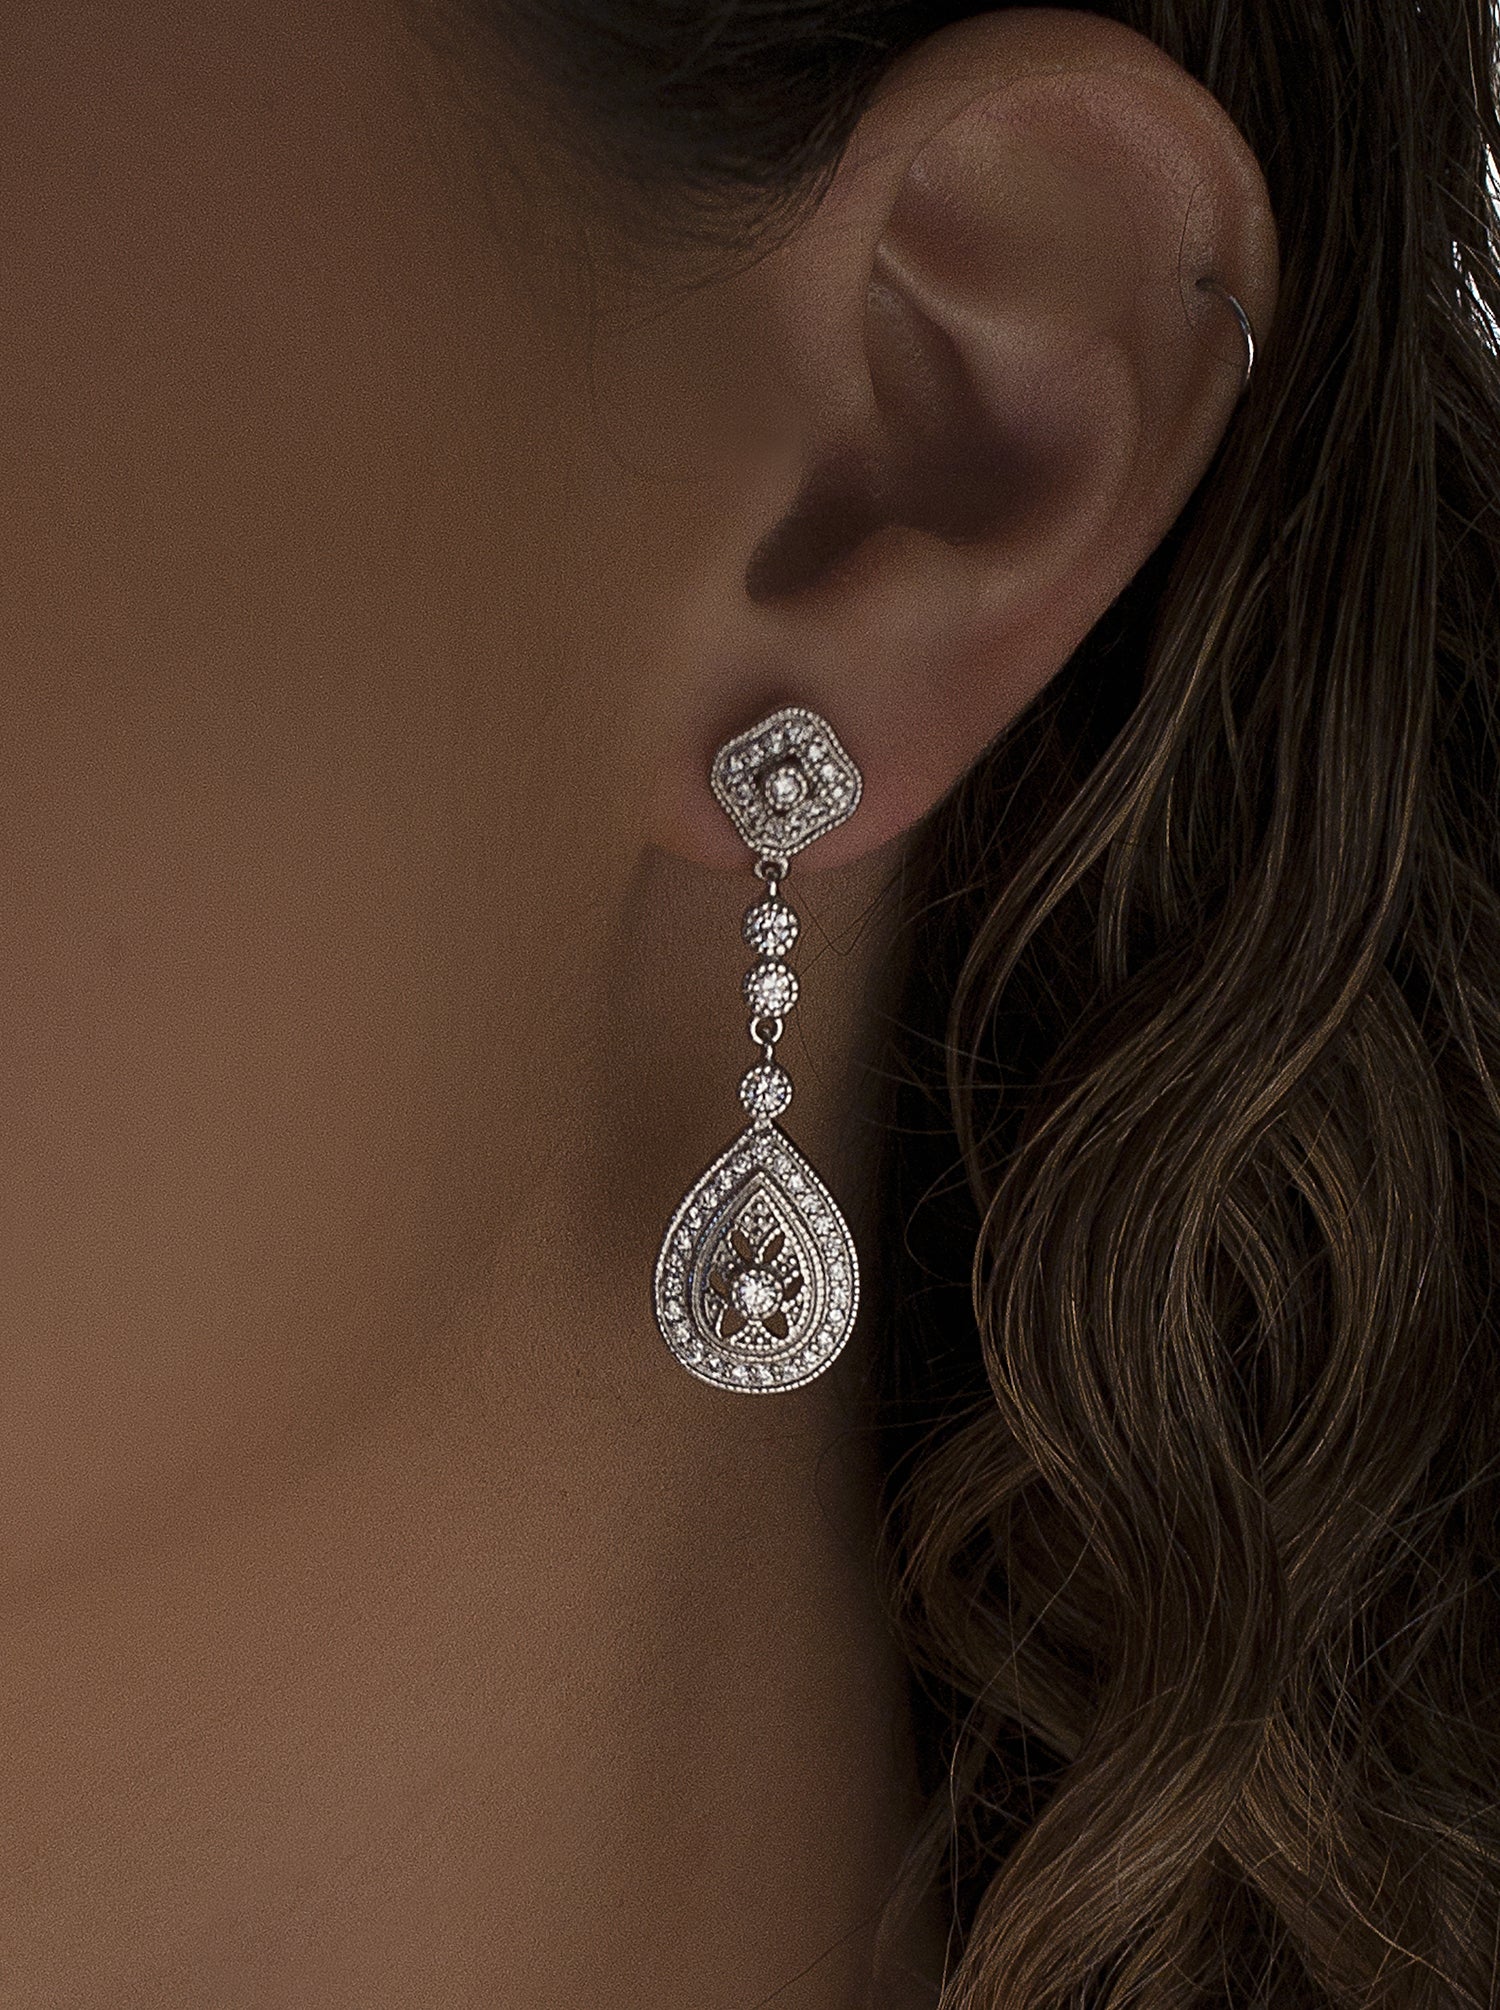 Earrings bridal swarovski drop earrings with zirconia design